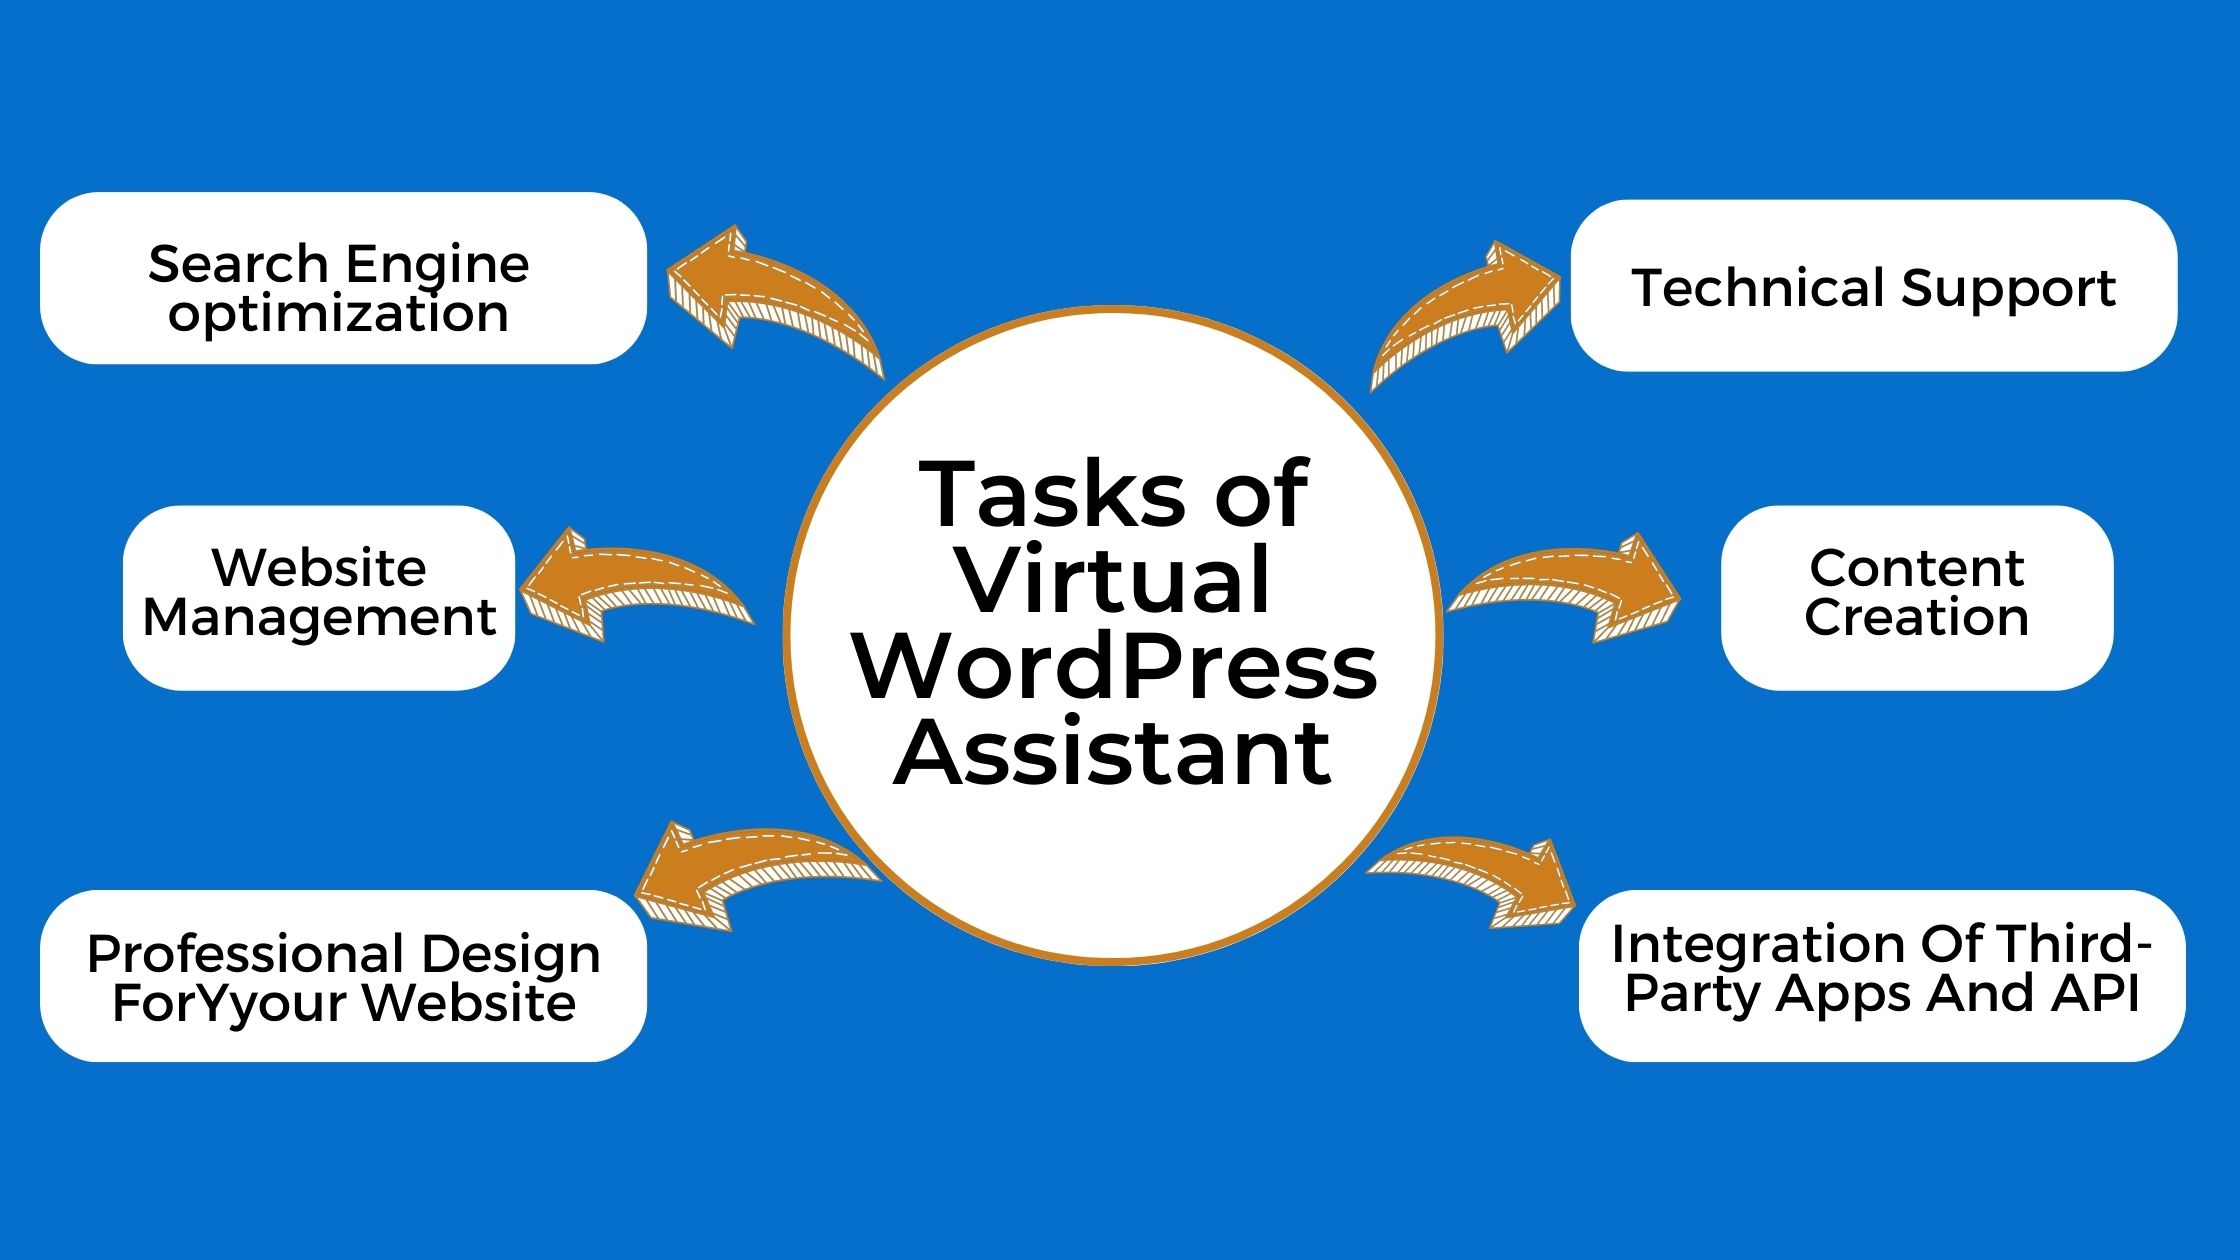 Tasks of a WordPress Virtual Assistant